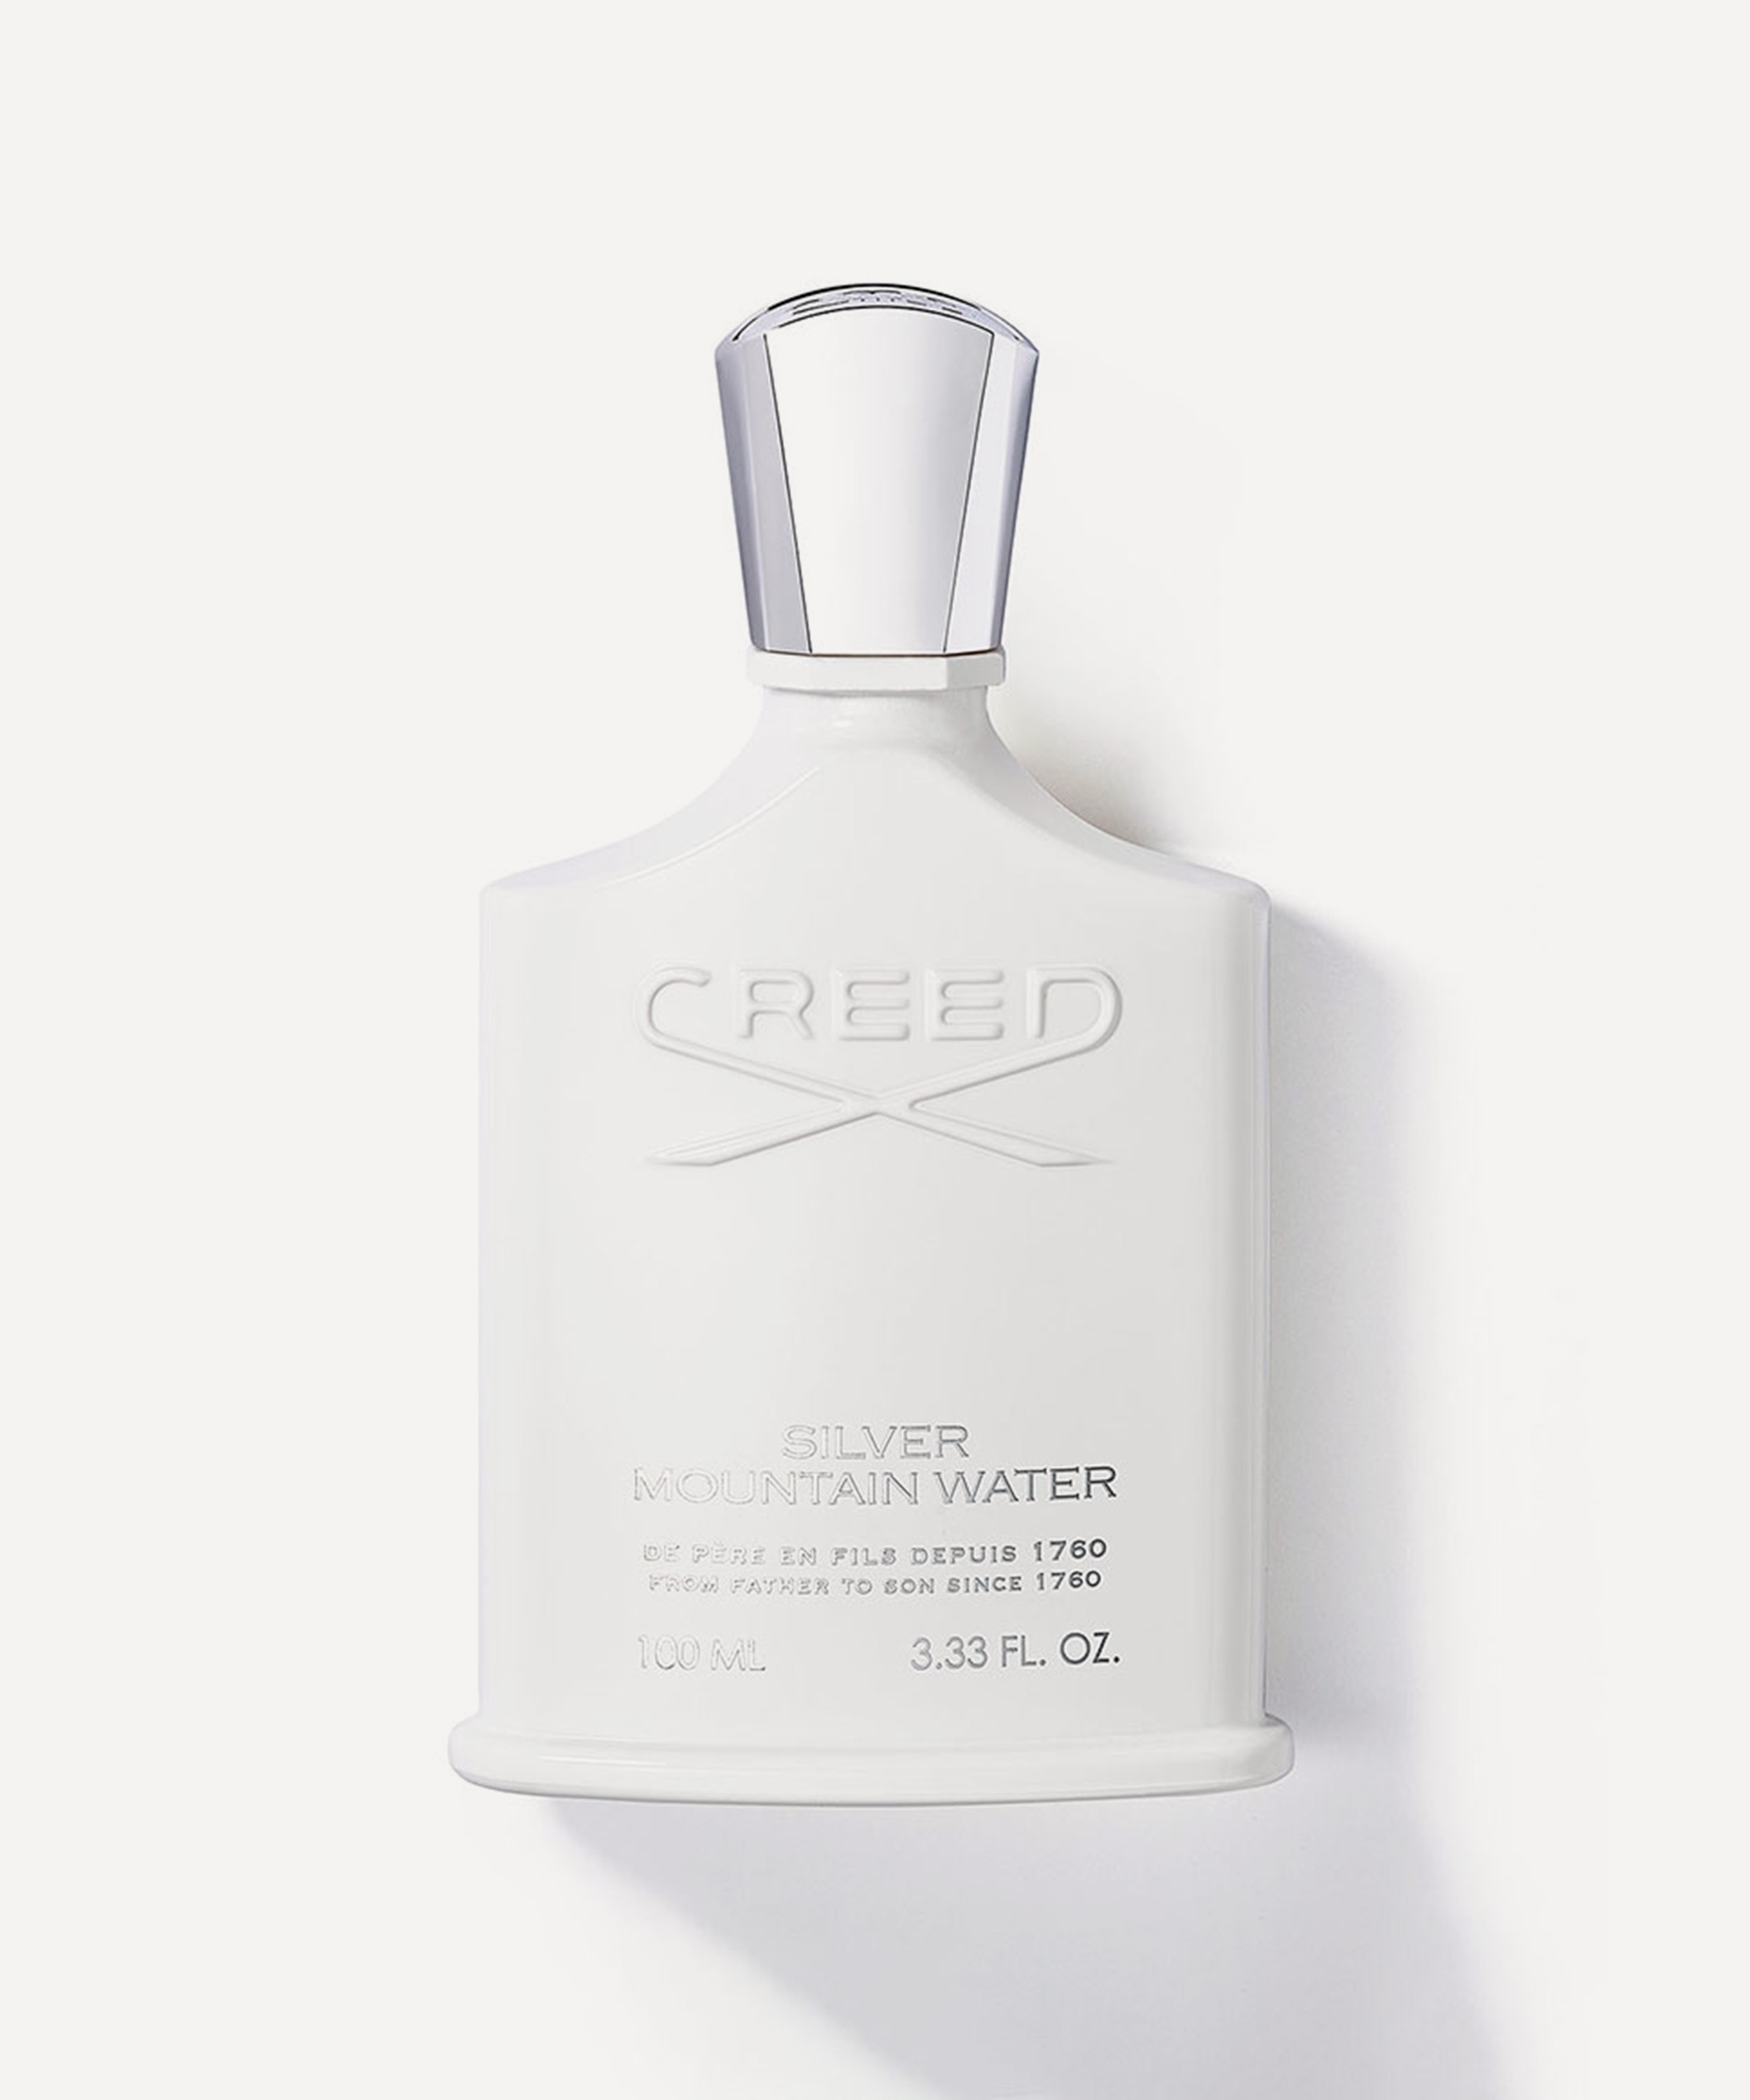 Creed - Silver Mountain Water Eau de Parfum 100ml